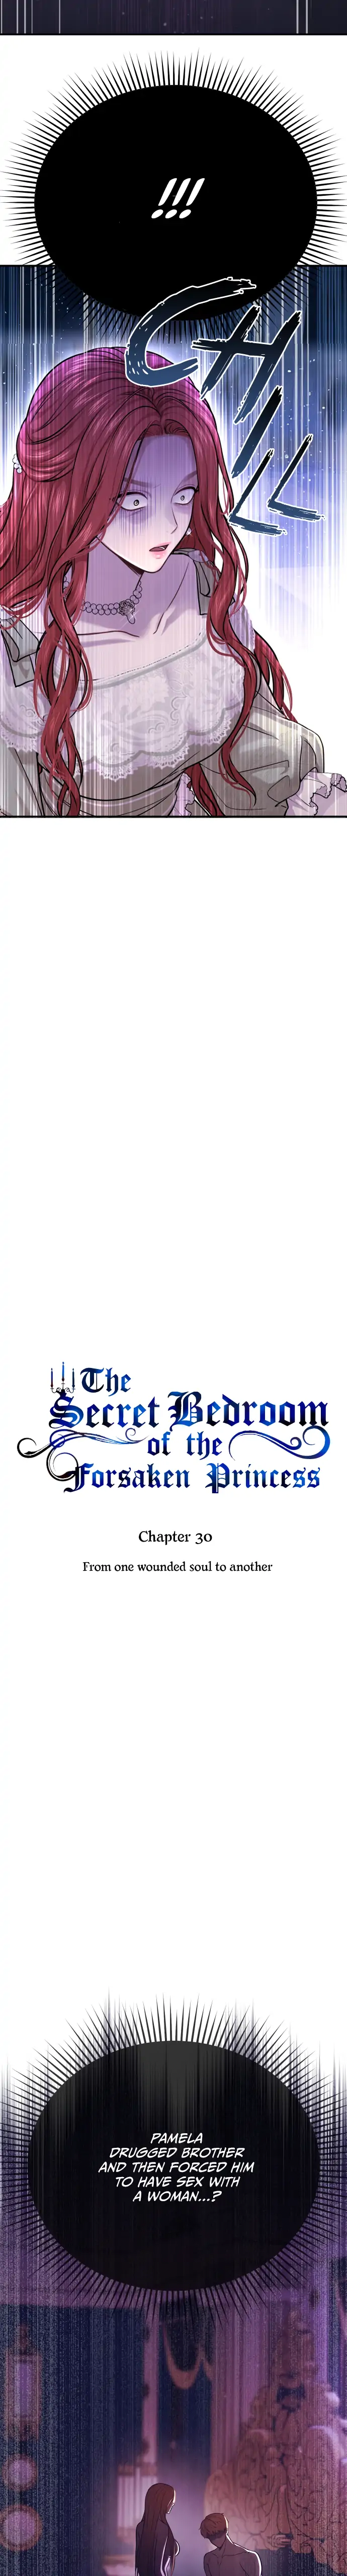 The Secret Bedroom of the Forsaken Princess - Chapter 30 Page 3